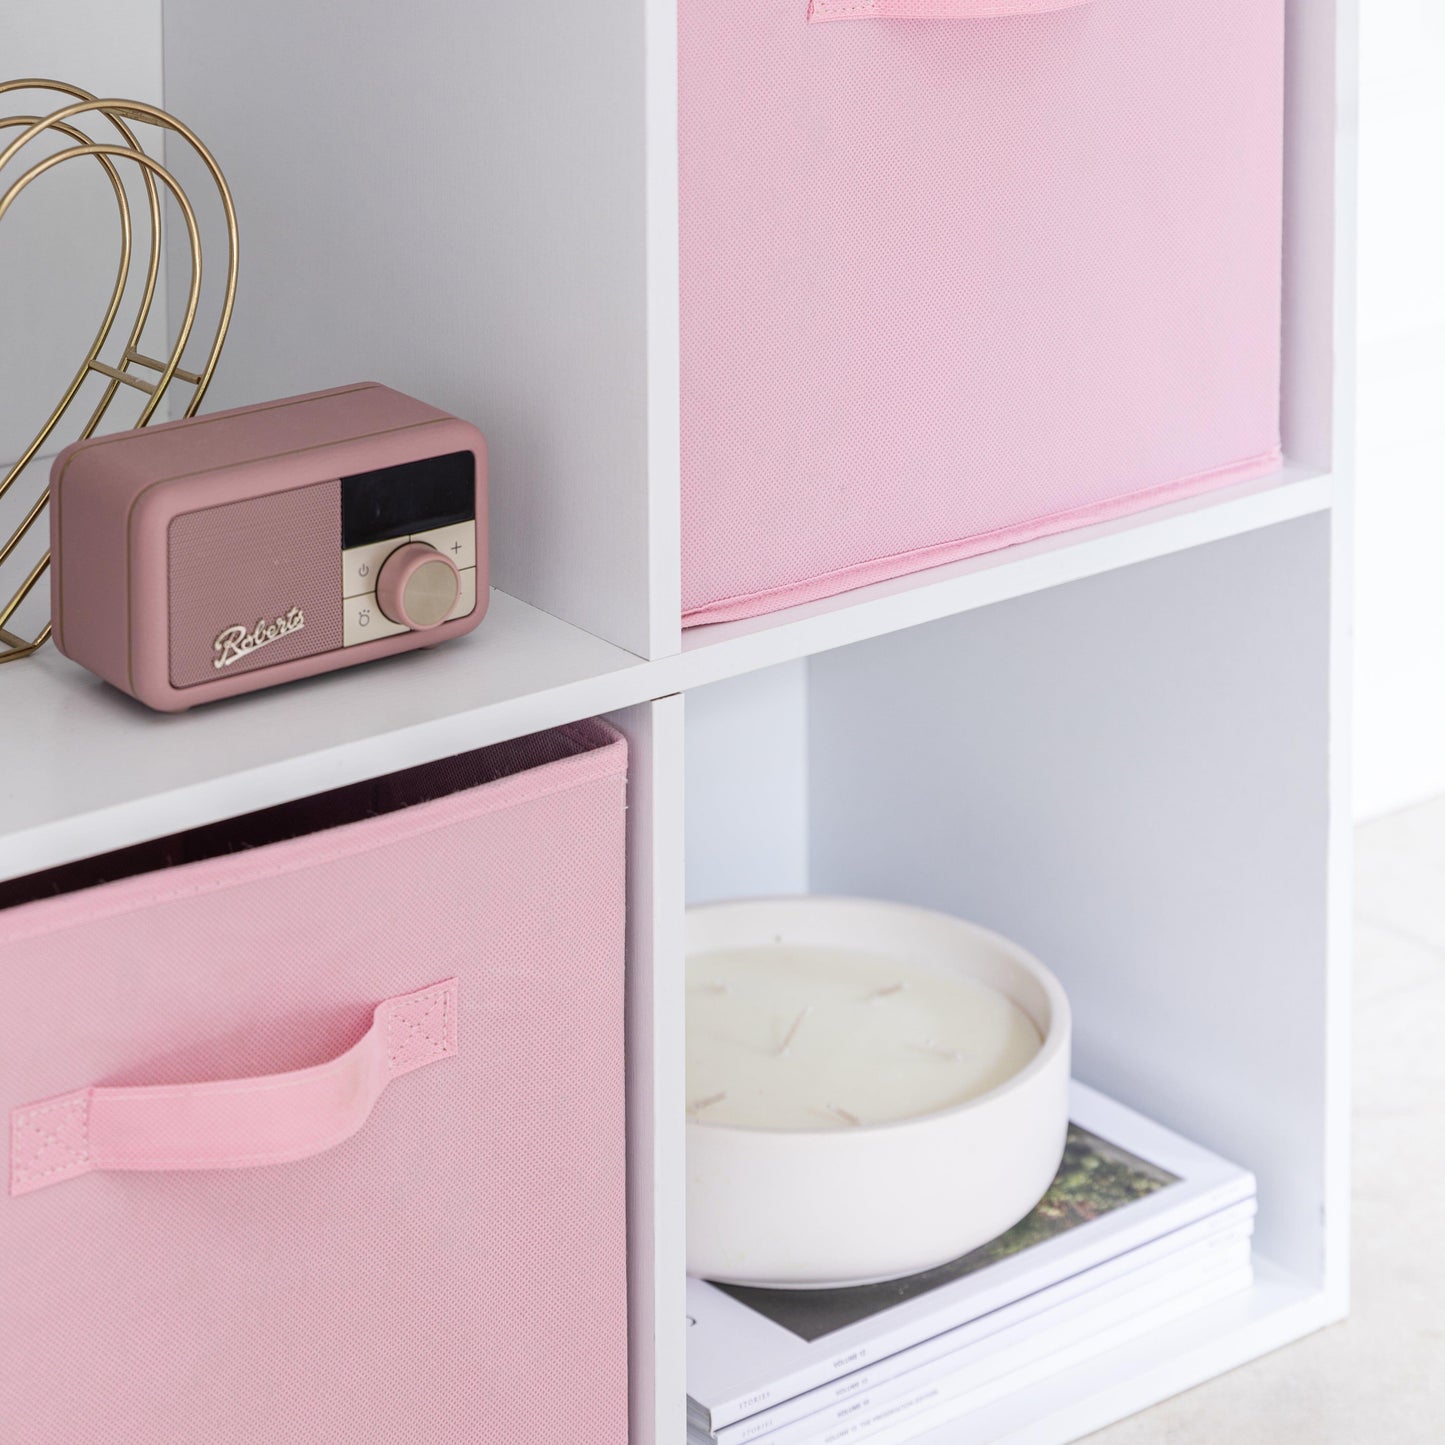 6 Cube White Bookcase Wooden Display Unit Shelving Storage Bookshelf Shelves (Pink Basket) - Laura James